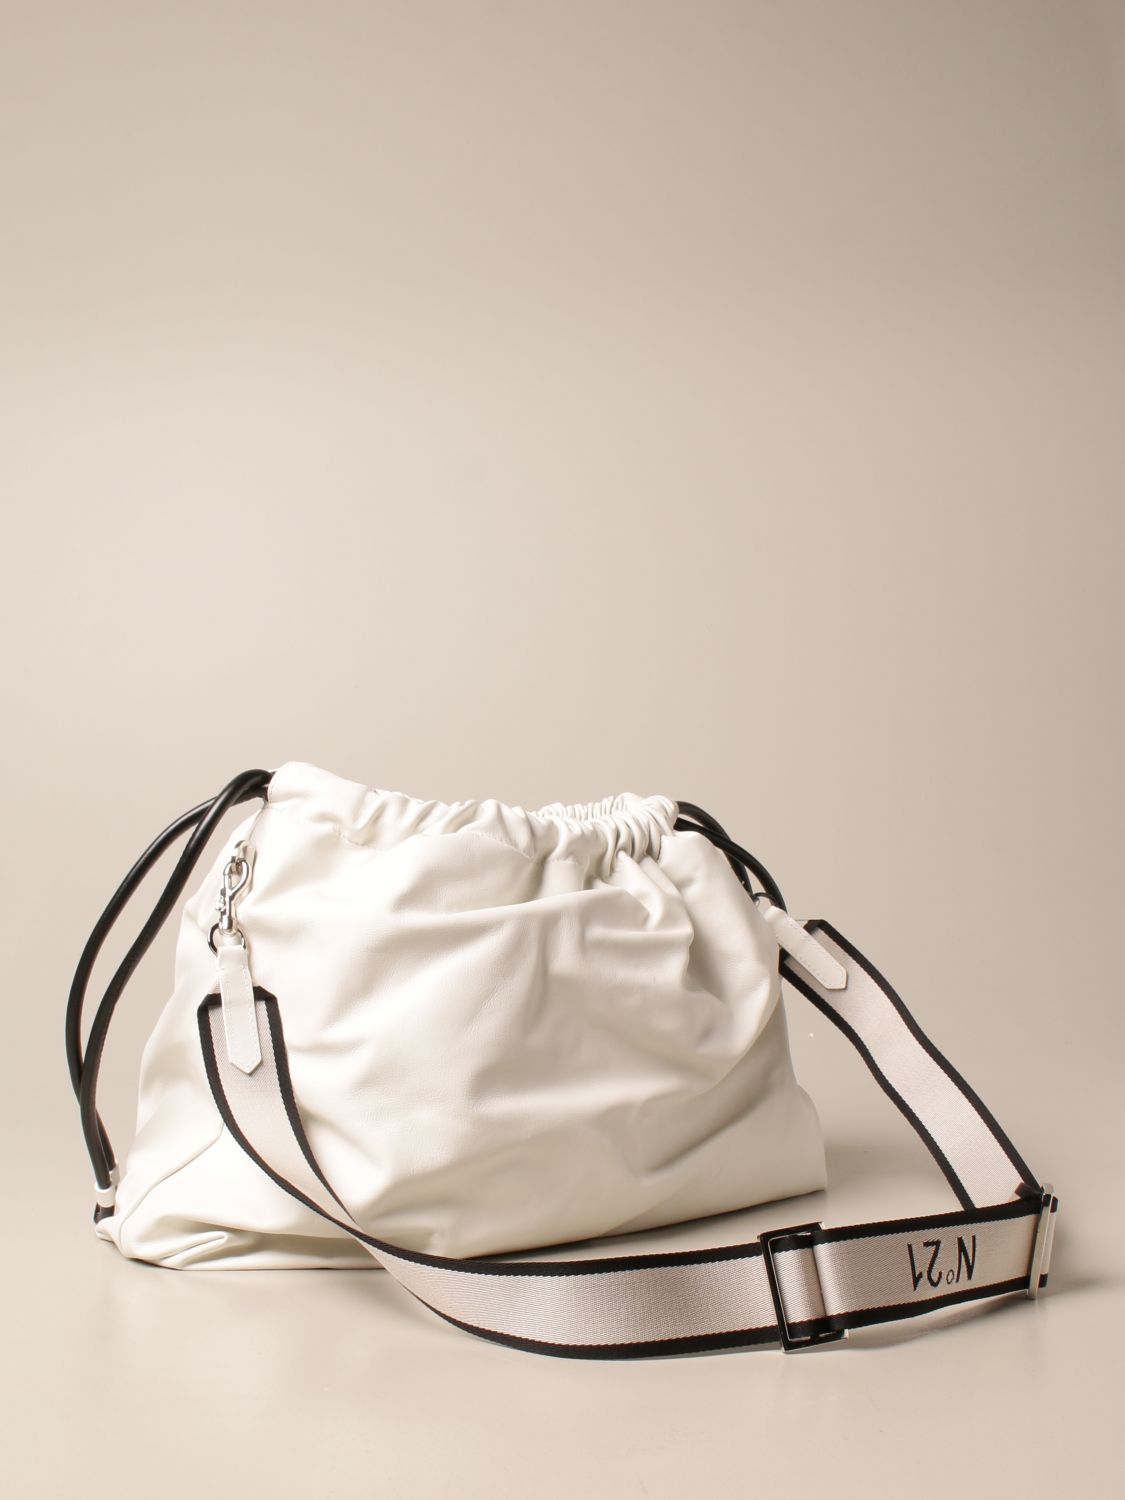 Cross body bags N°21 - Eva Pouch bag in white - 21EBP0858ECO0W001